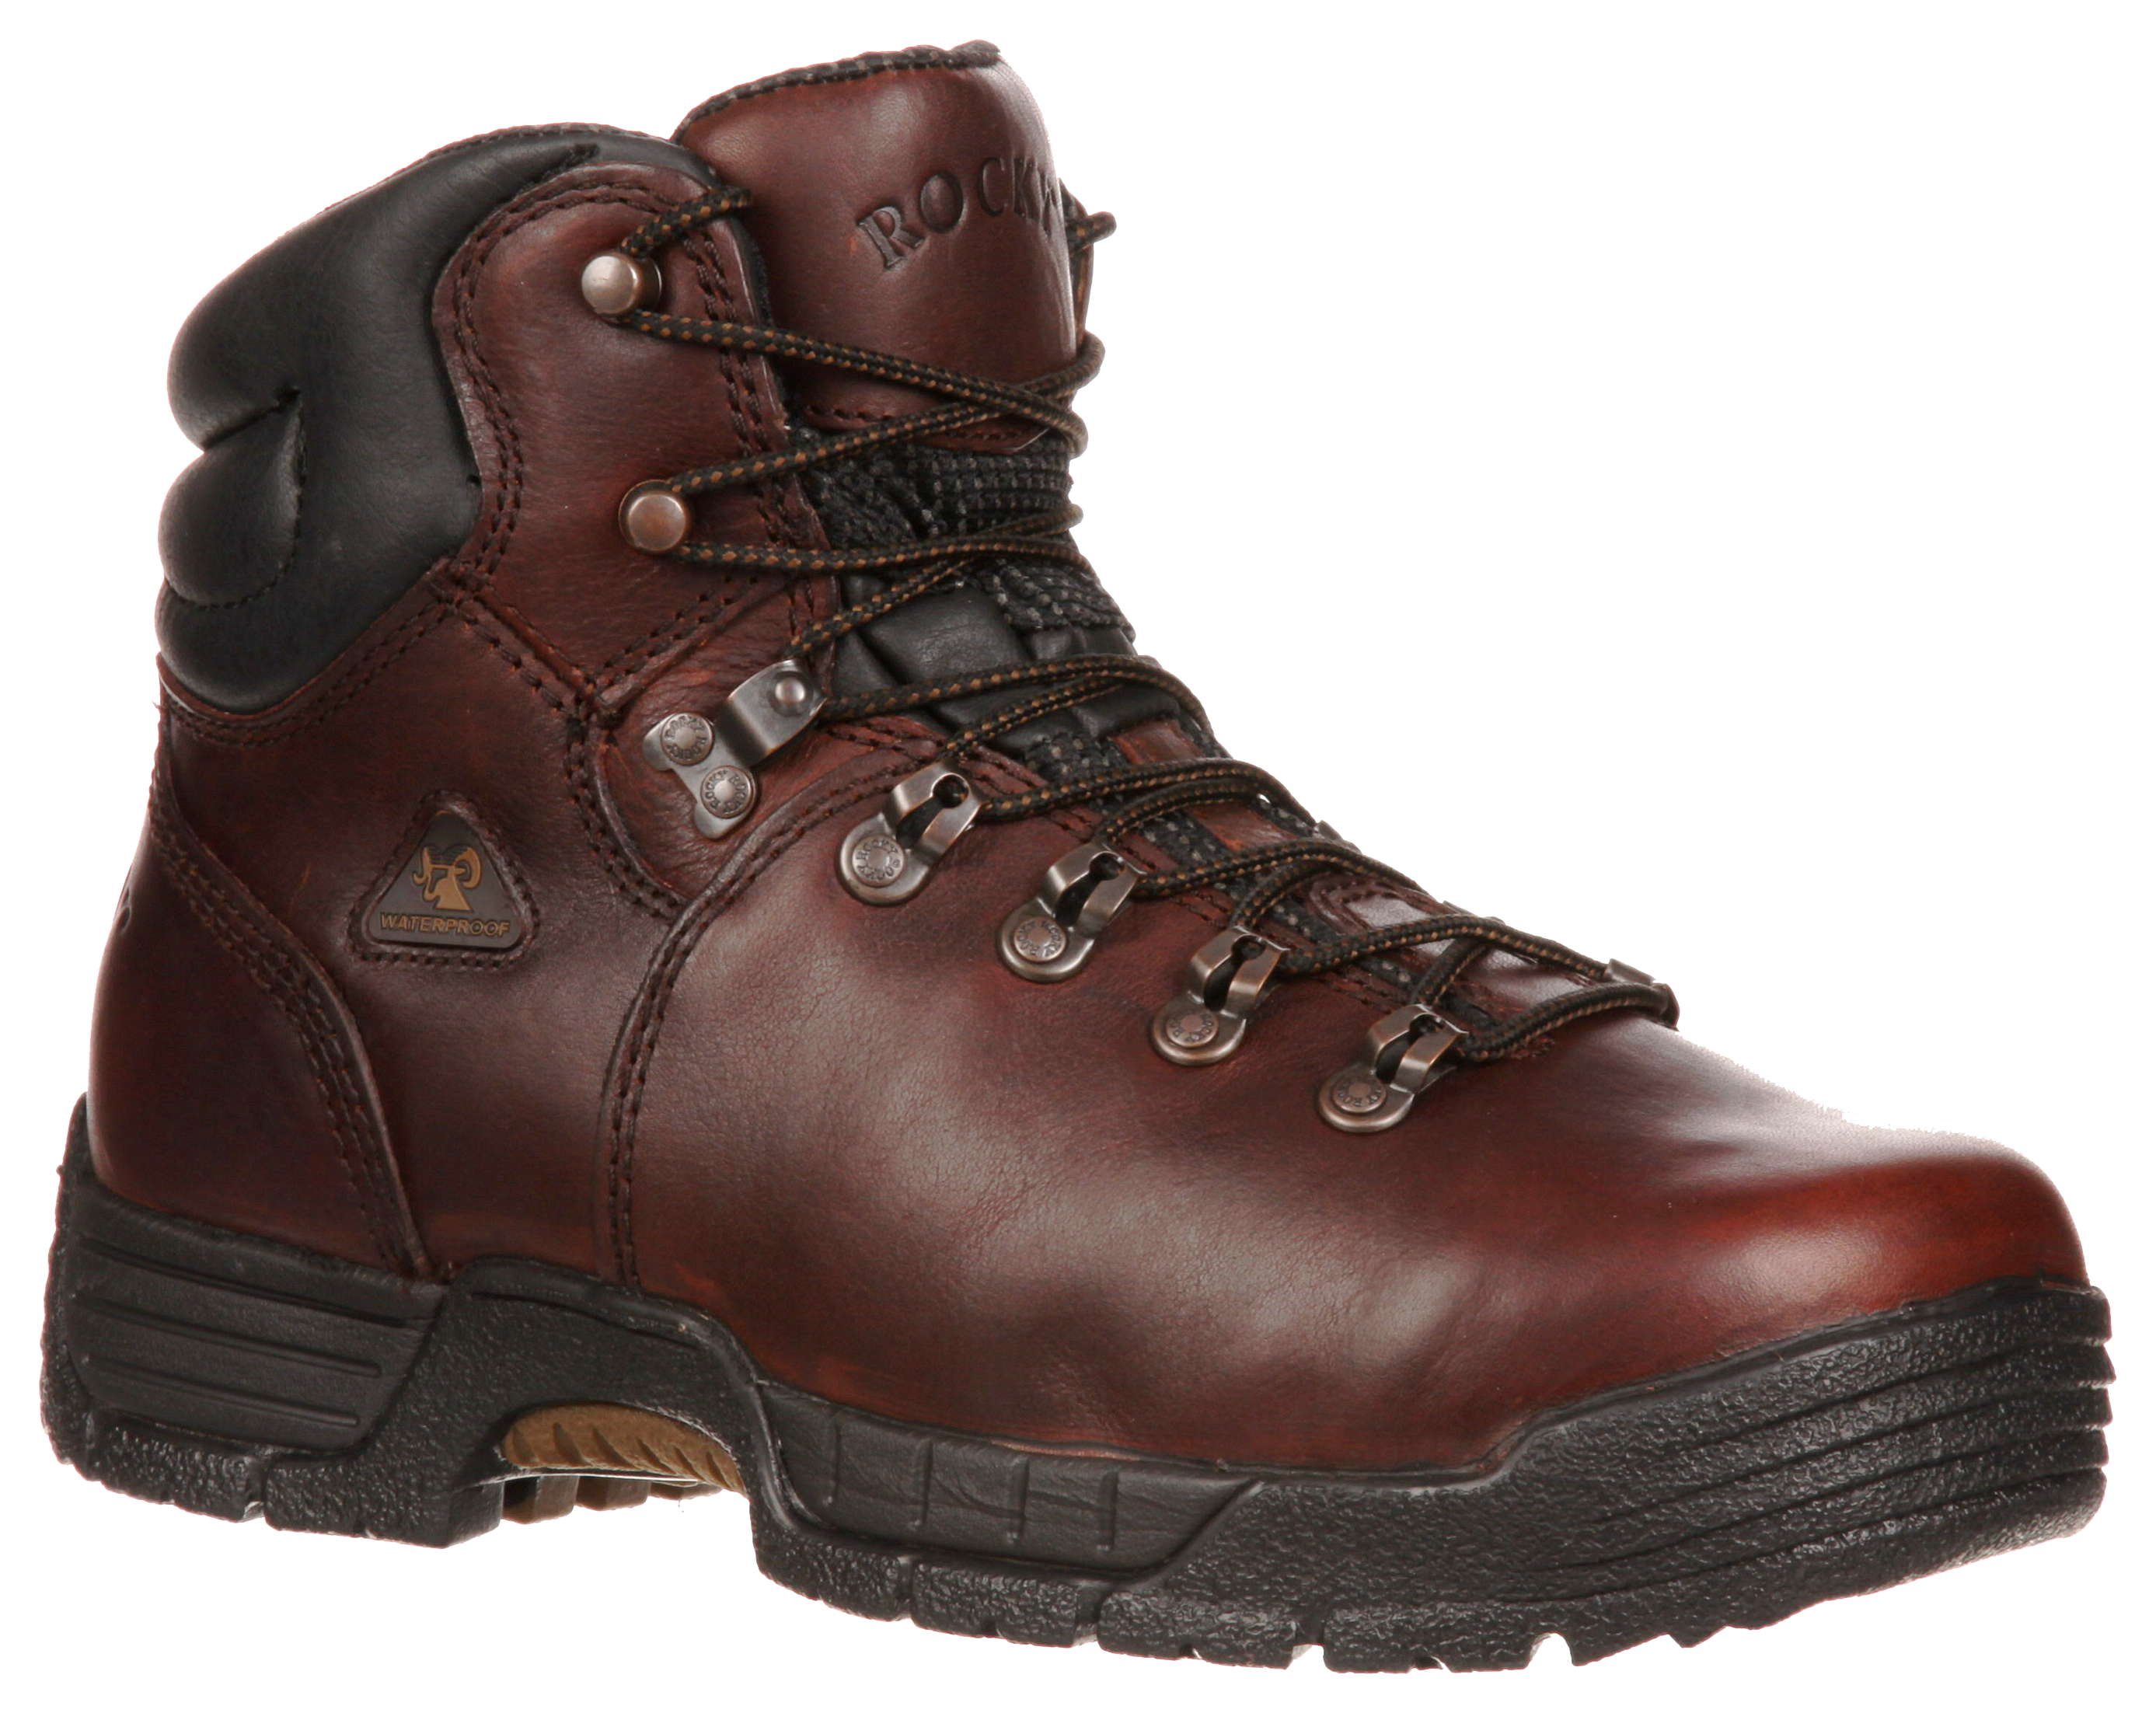 ROCKY MobiLite Waterproof Steel Toe Work Boots for Men - Brown - 8 W